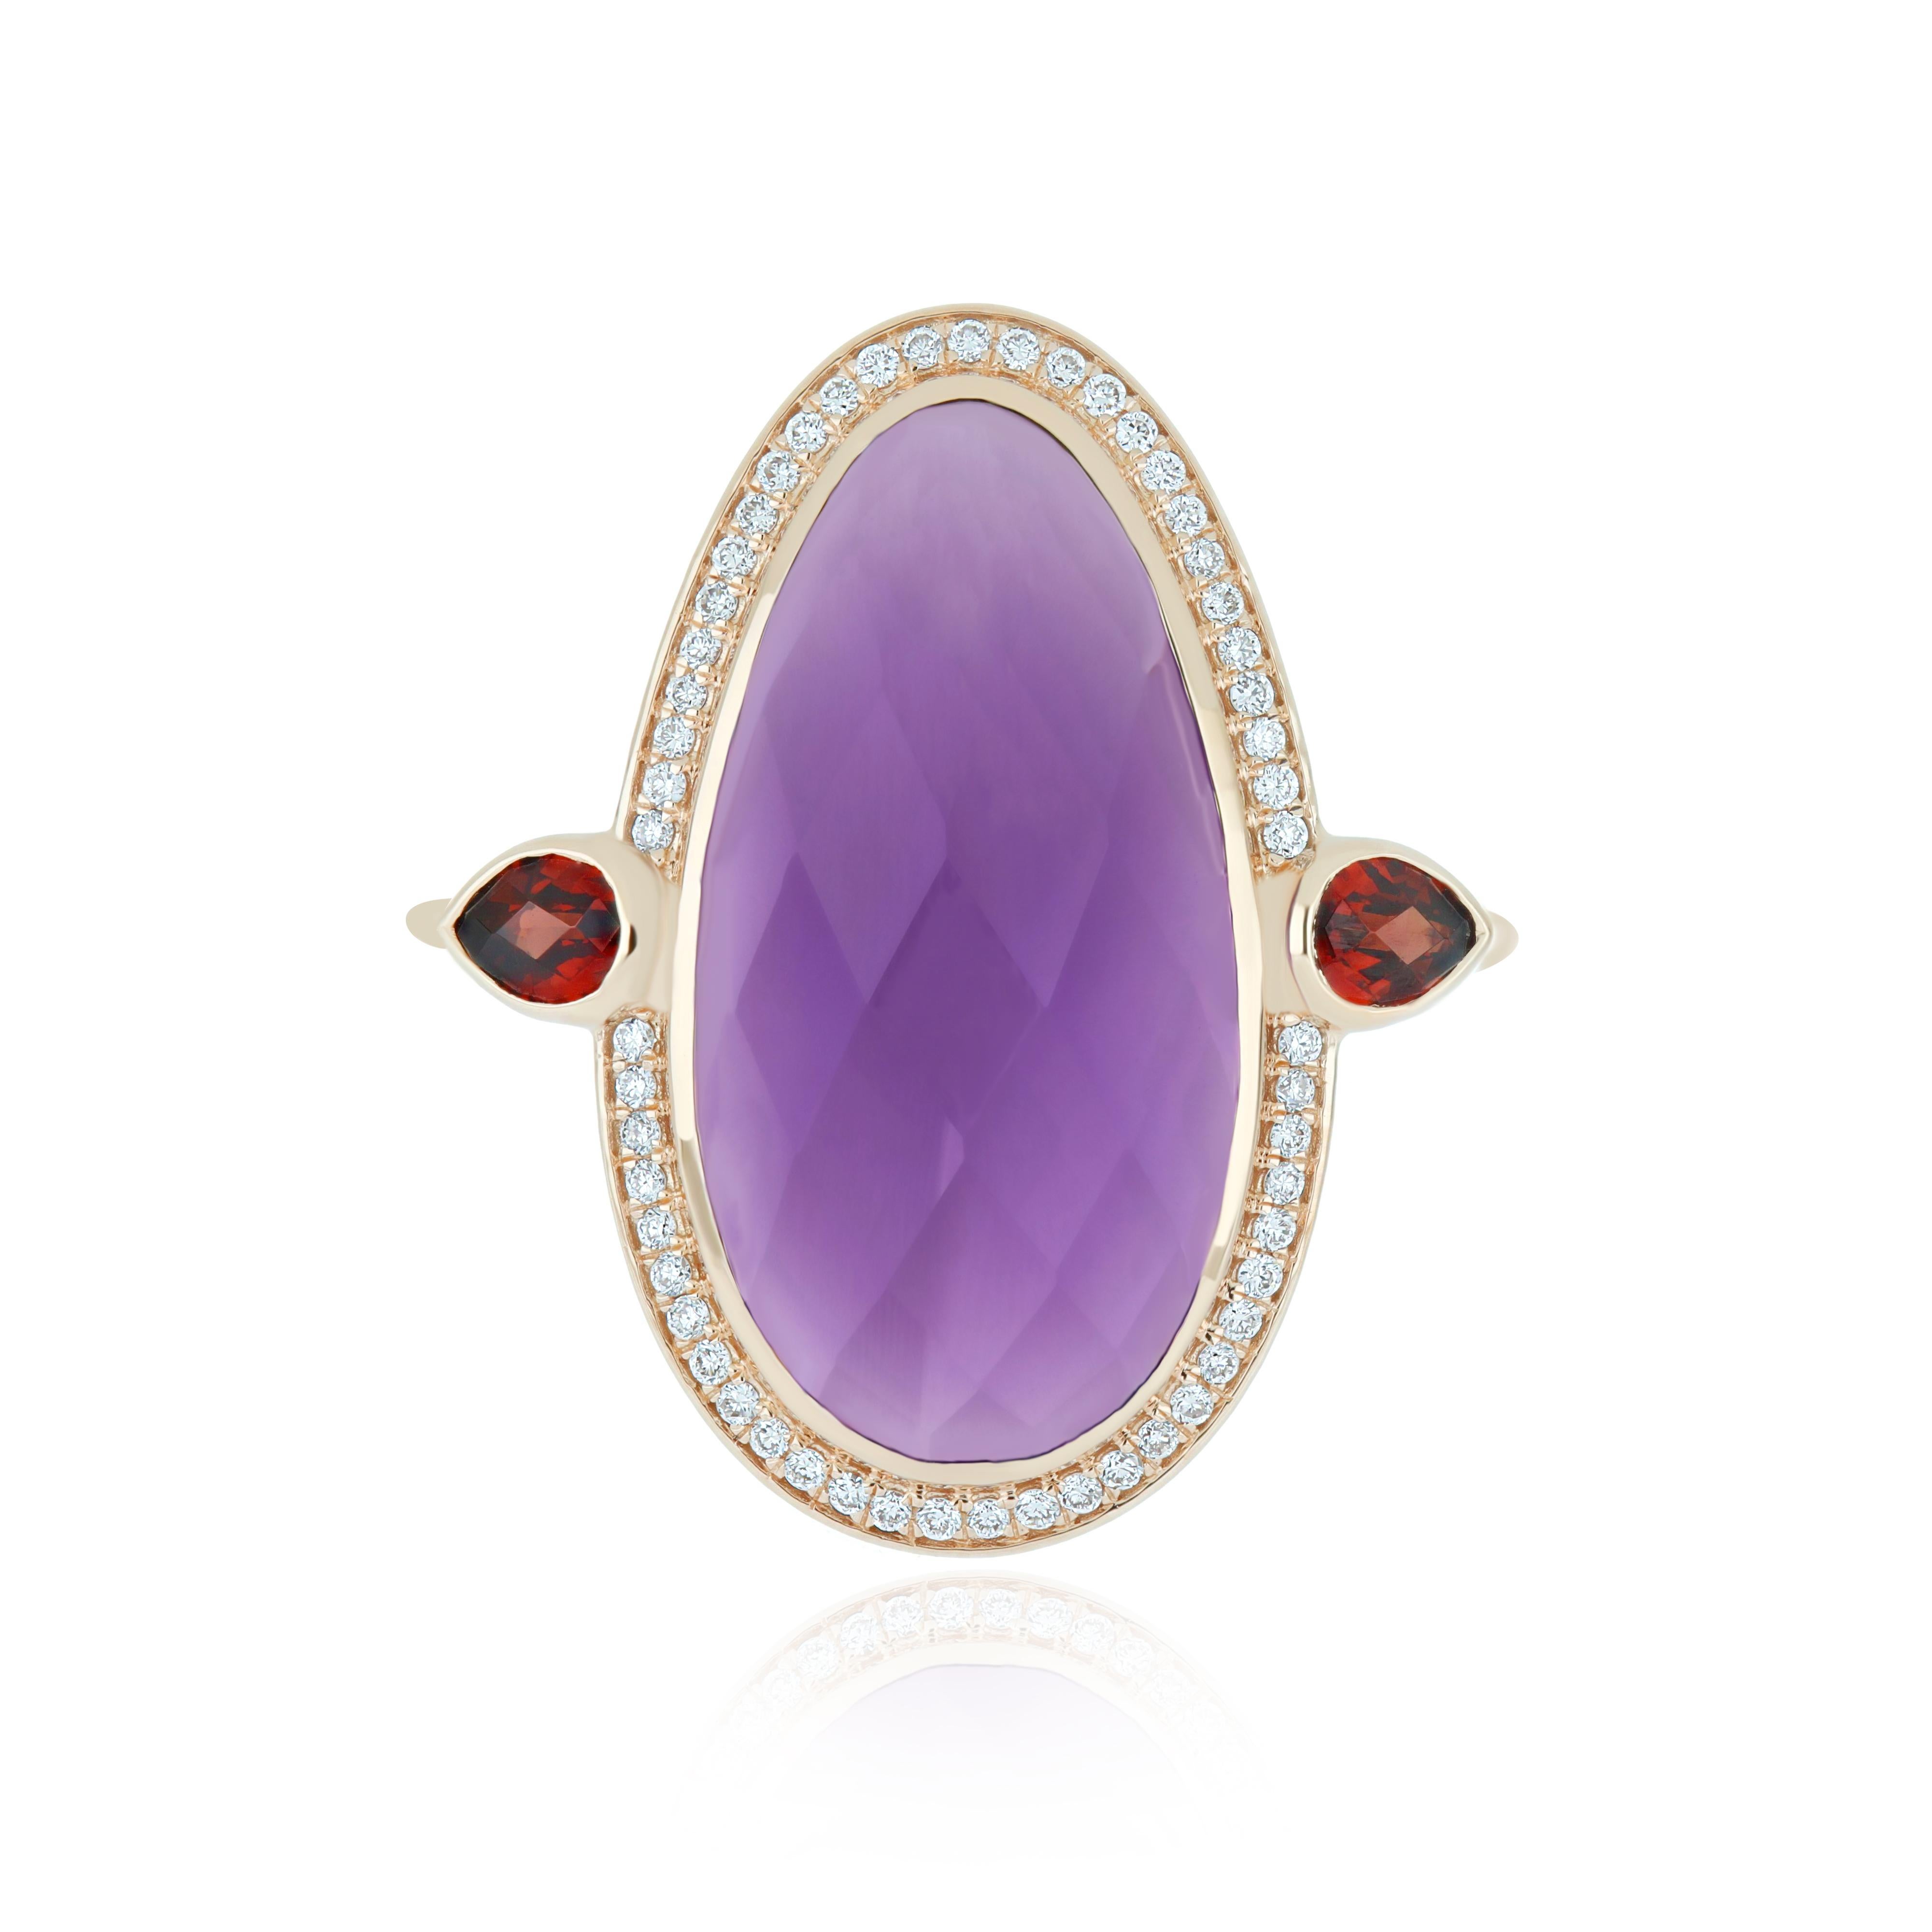 For Sale:   14K Rose Gold Handmade jewelry, Amethyst, Garnet & Diamond Ring Birth stone 7